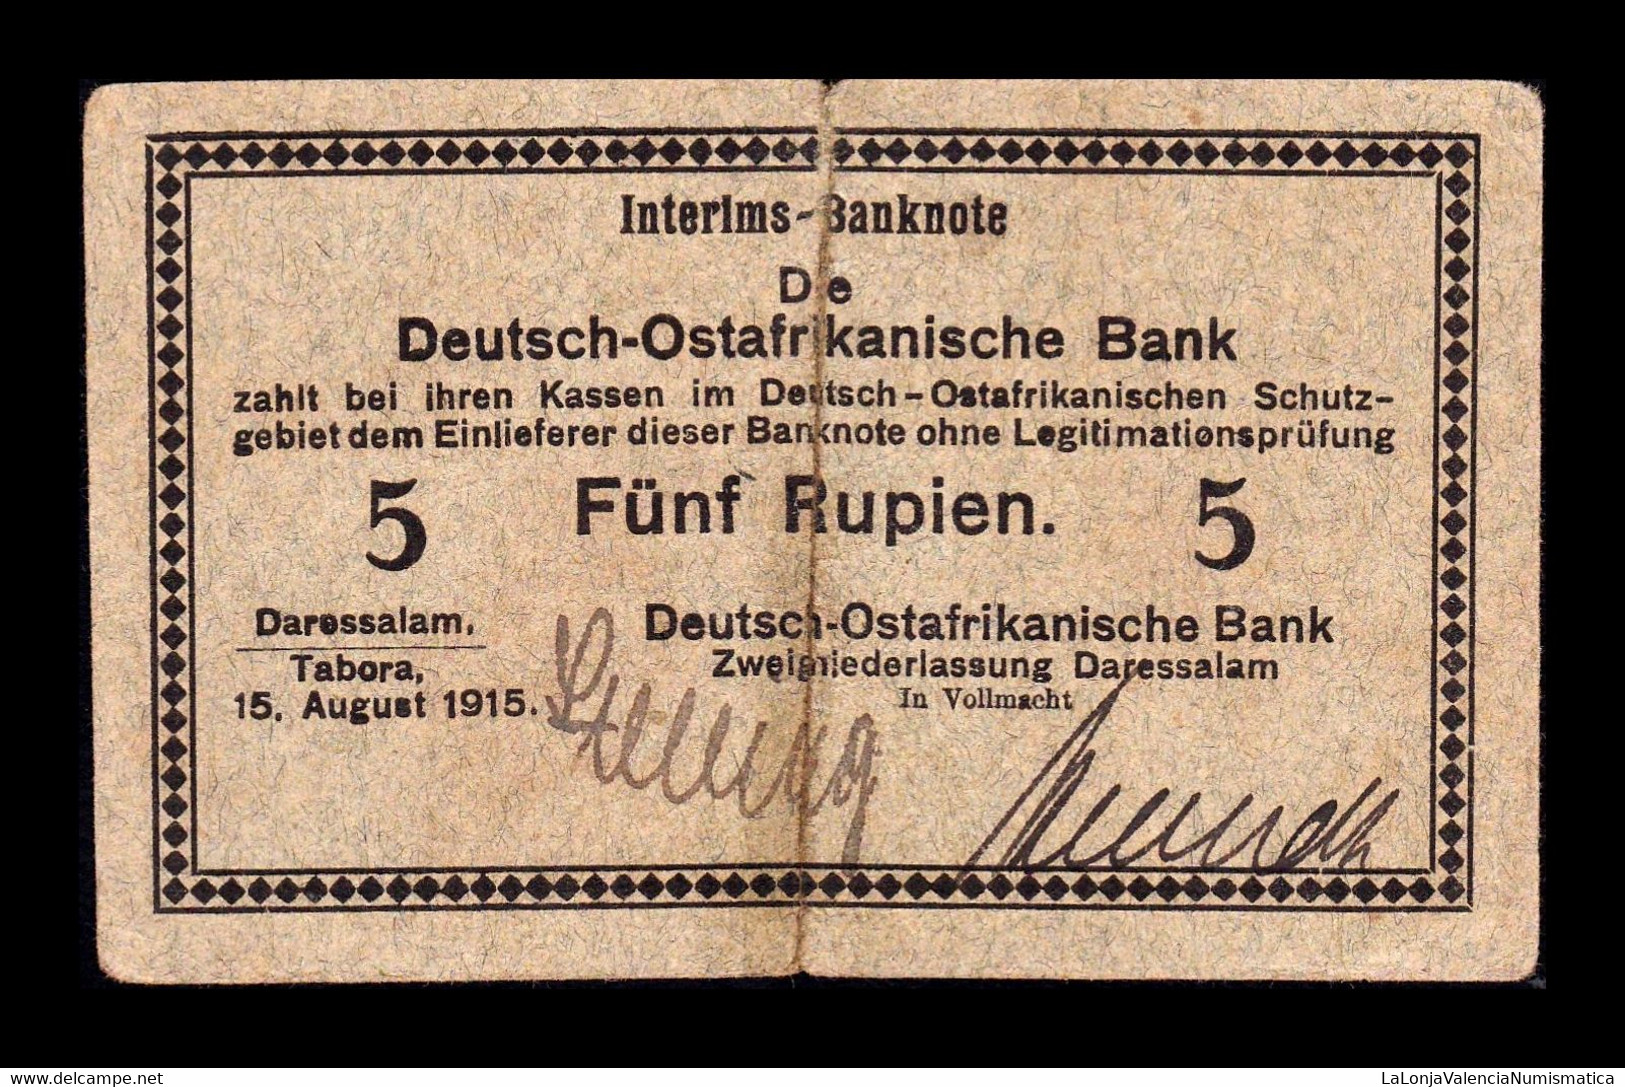 África Oriental Alemana German East Africa 5 Rupien 1915 Pick 31(4) Serie B BC F - Deutsch-Ostafrikanische Bank